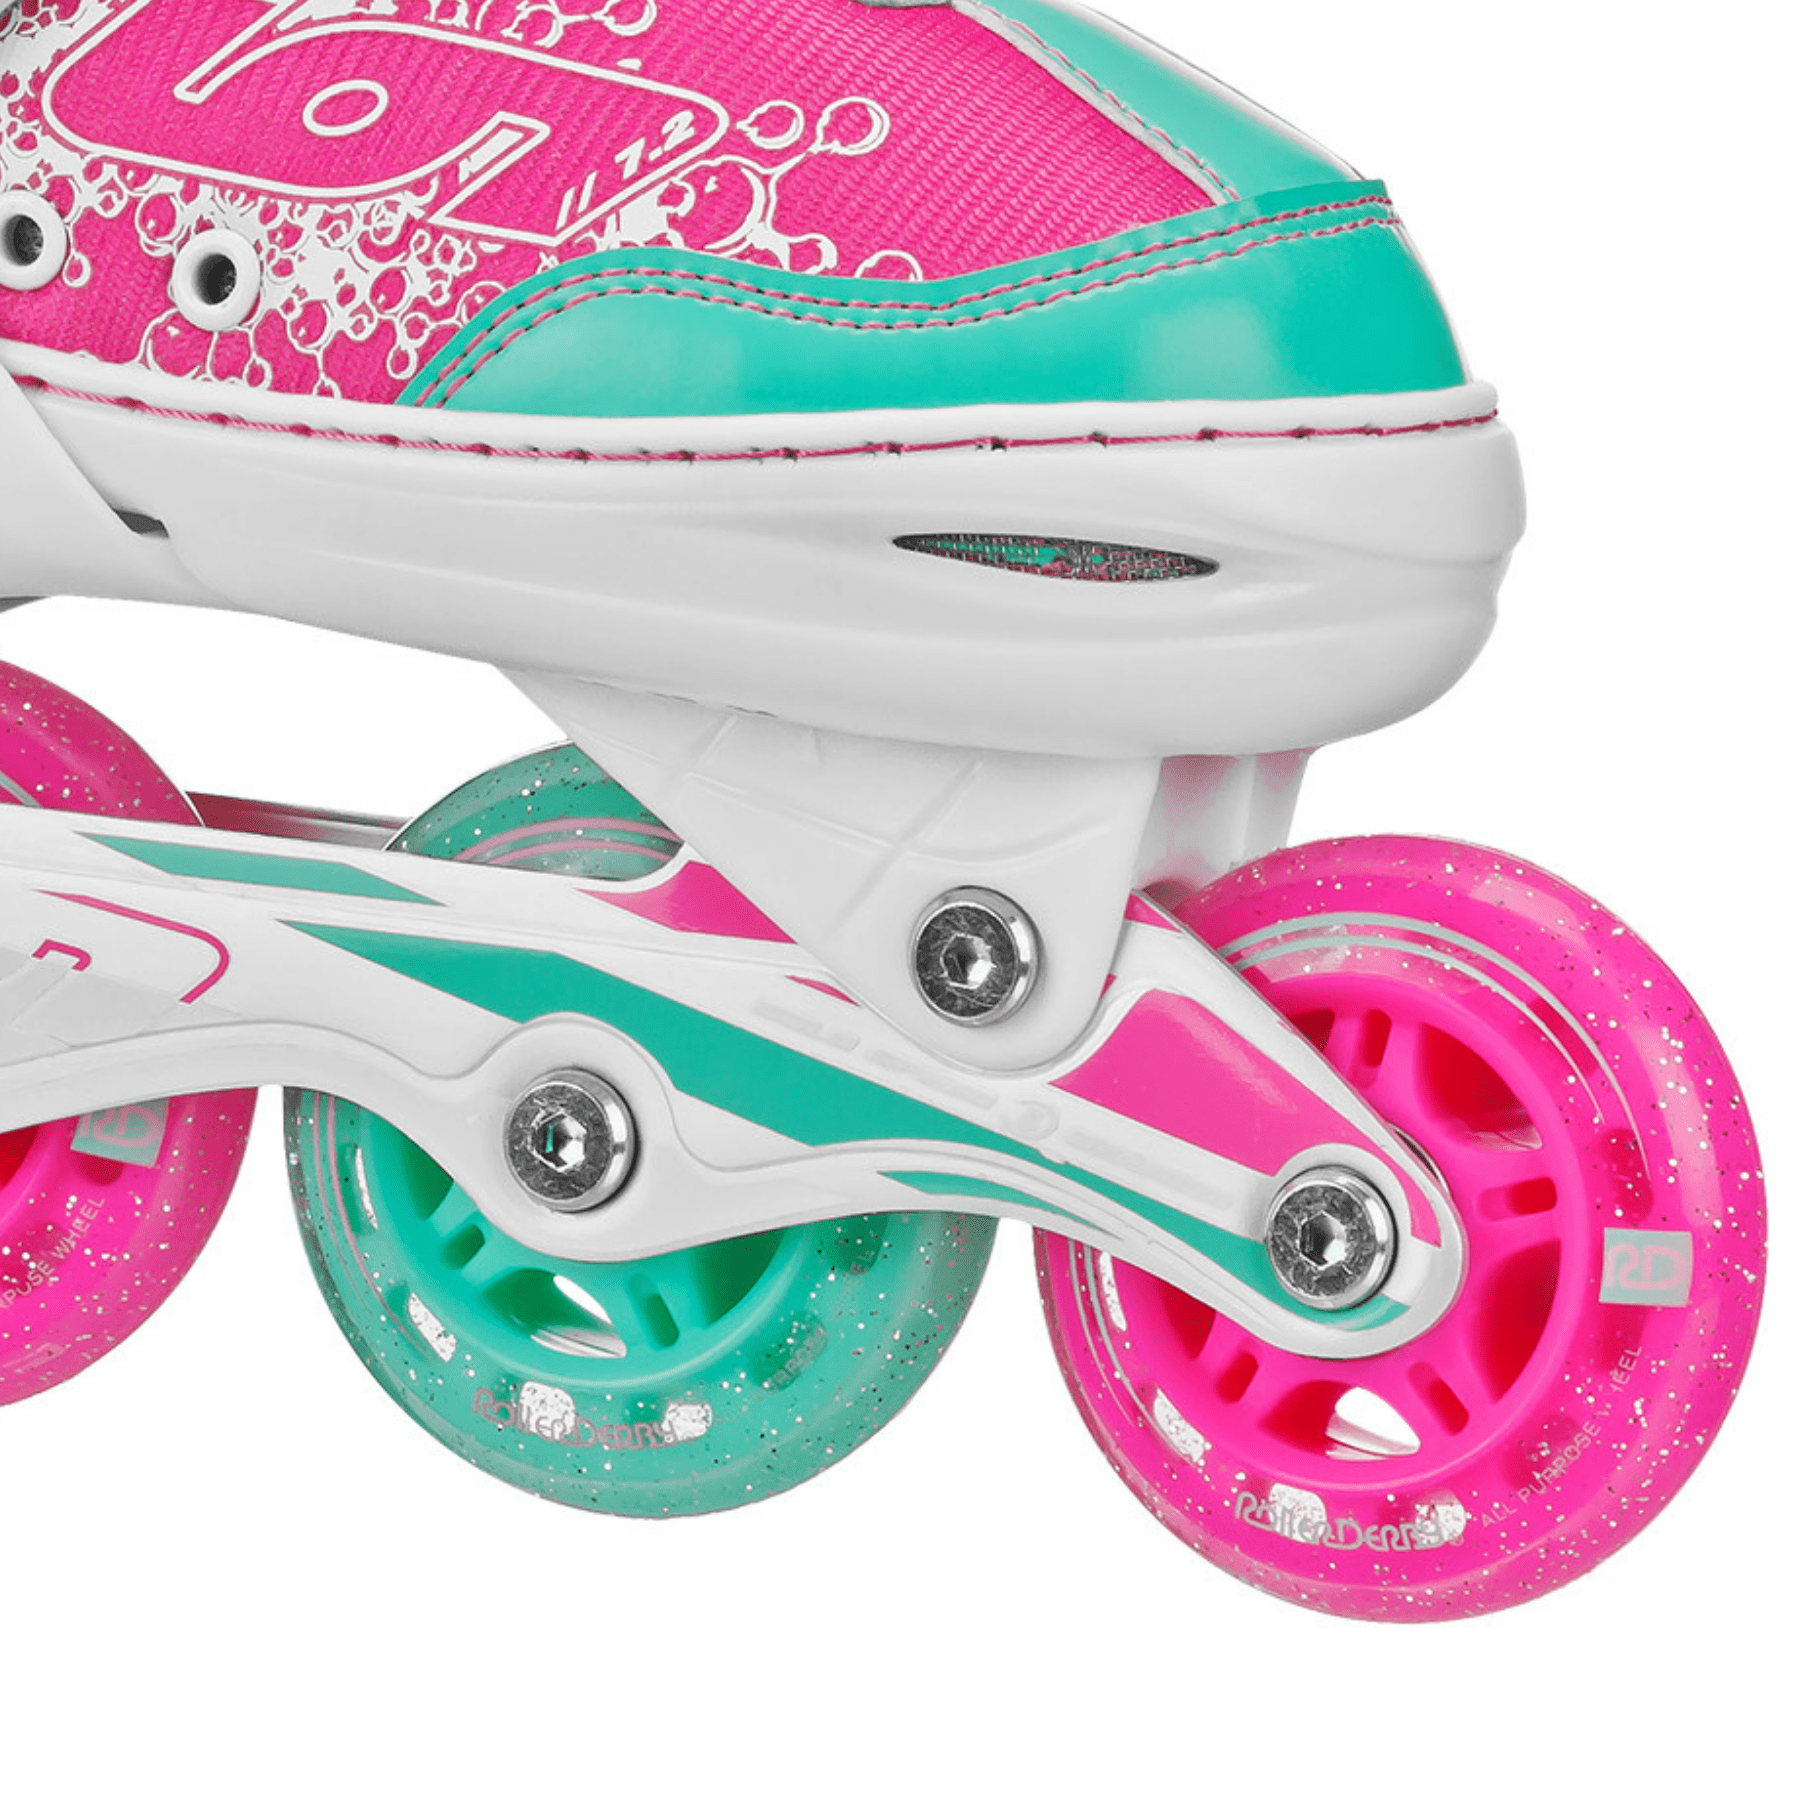 Koken Tegen ironie Roller Derby ION 7.2 Girl's Adjustable Inline Skate - Walmart.com